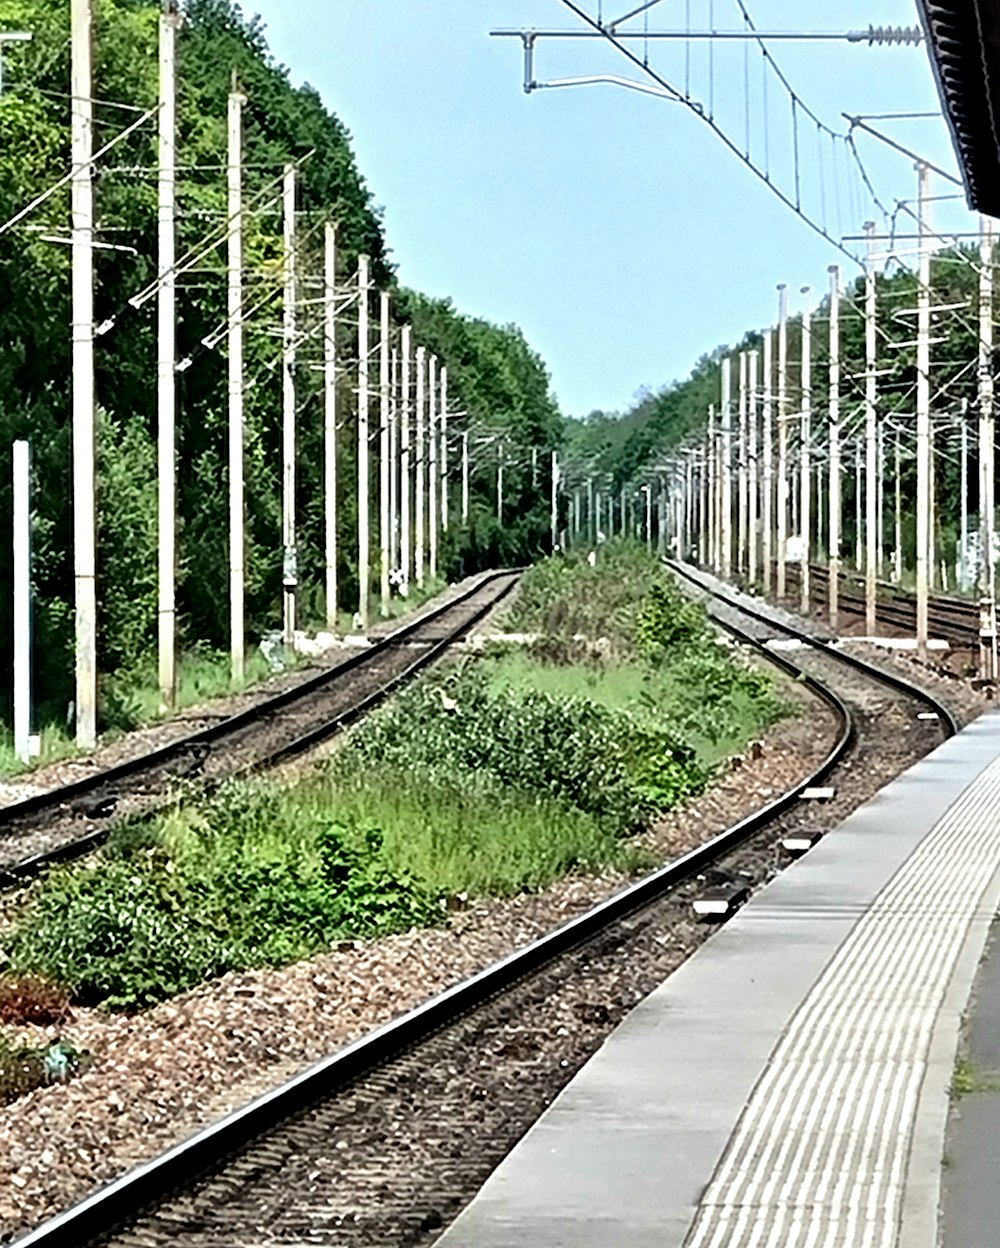 train tracks with white poles